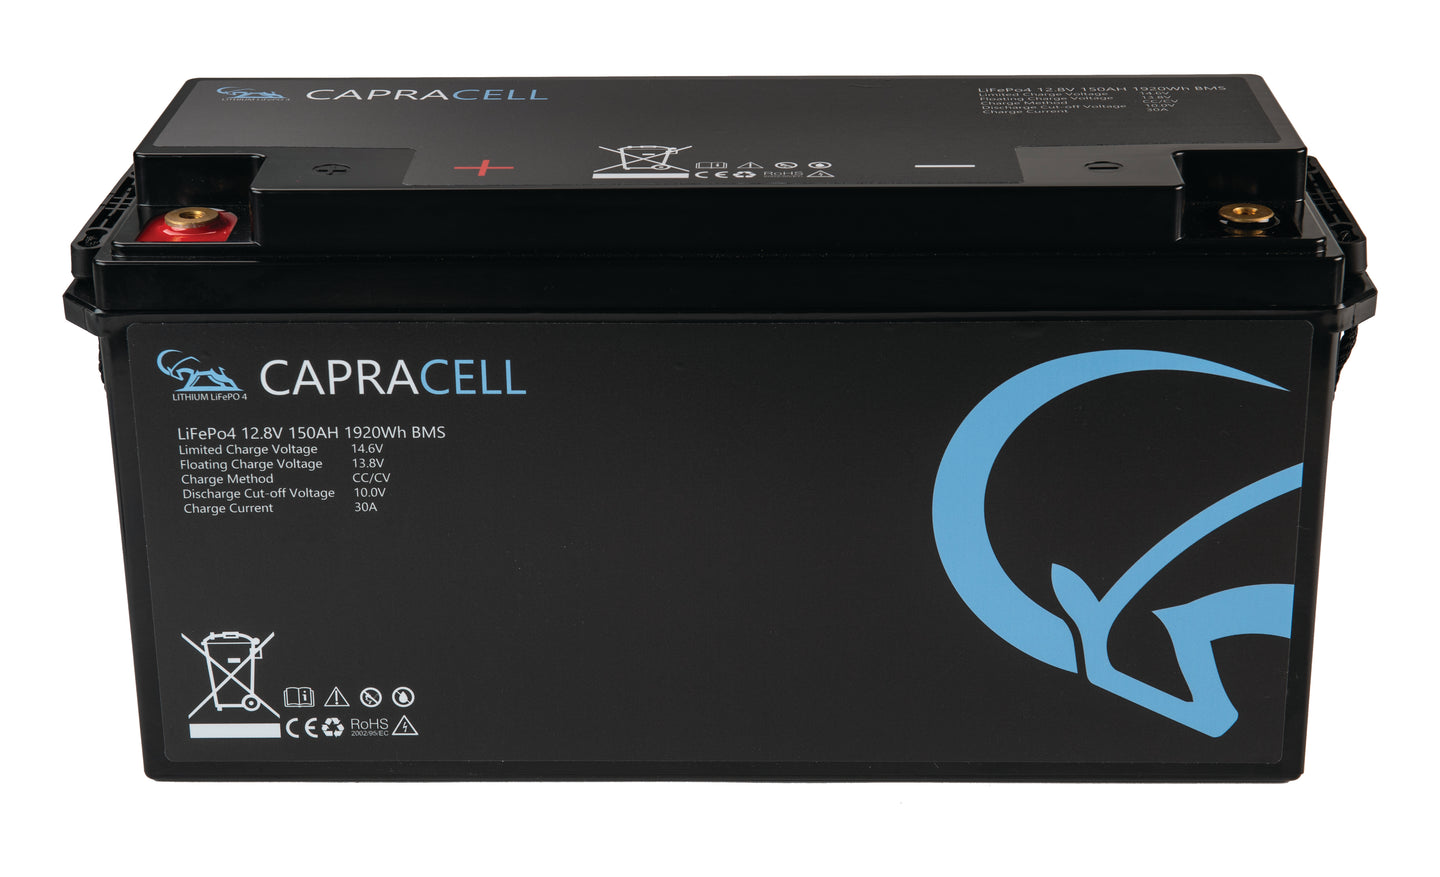 CAPRACELL LiFePO4 Akku 12,8V 150AH als Zusatzbatterie Boot & Wohnmobil